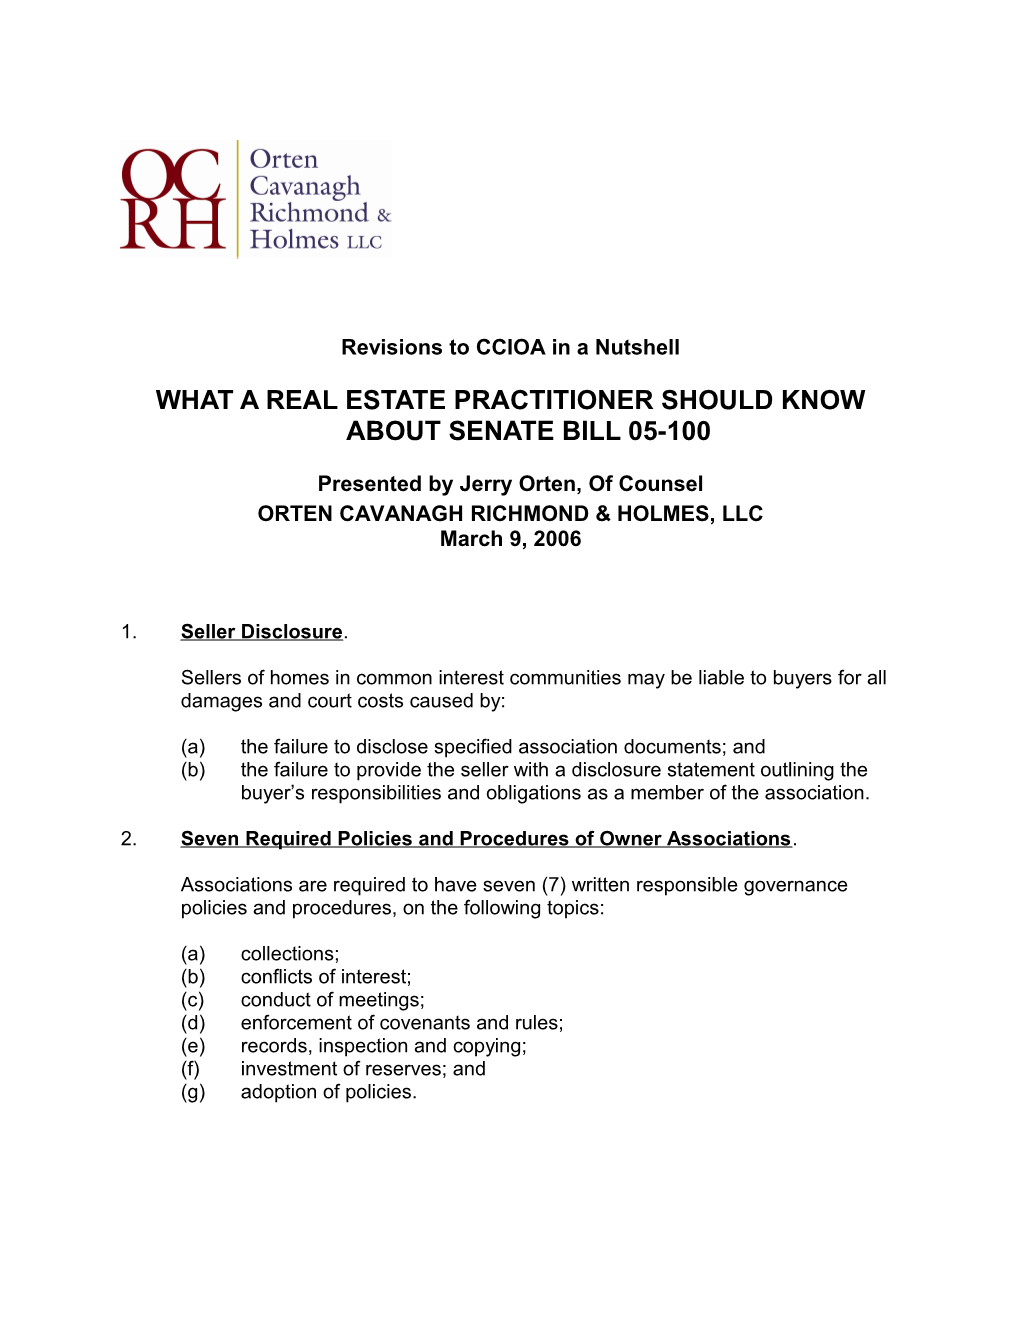 Revisions to CCIOA in a Nutshell -Senate Bill 05-100